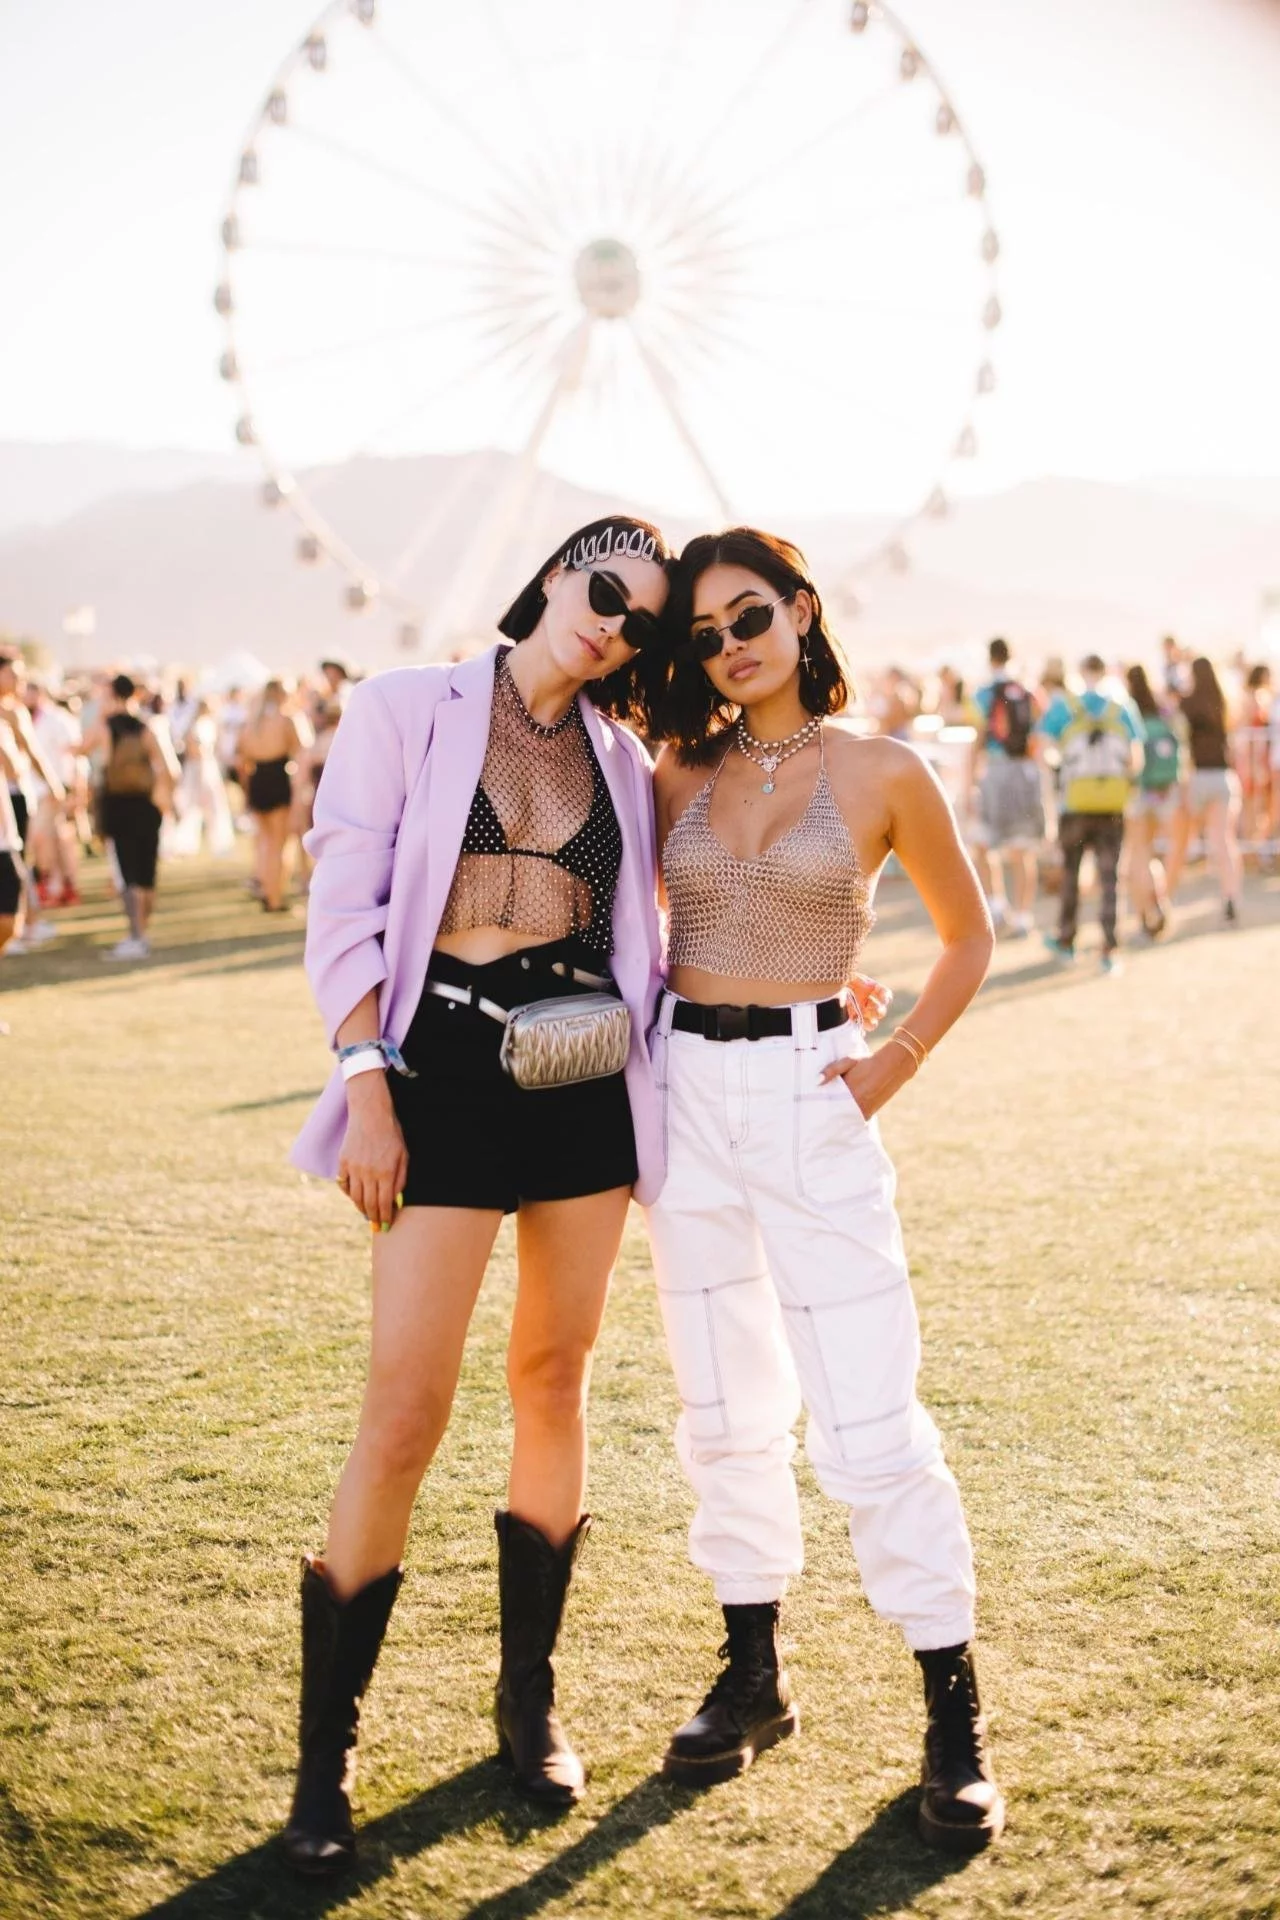 Why we’re loving Coachella this year